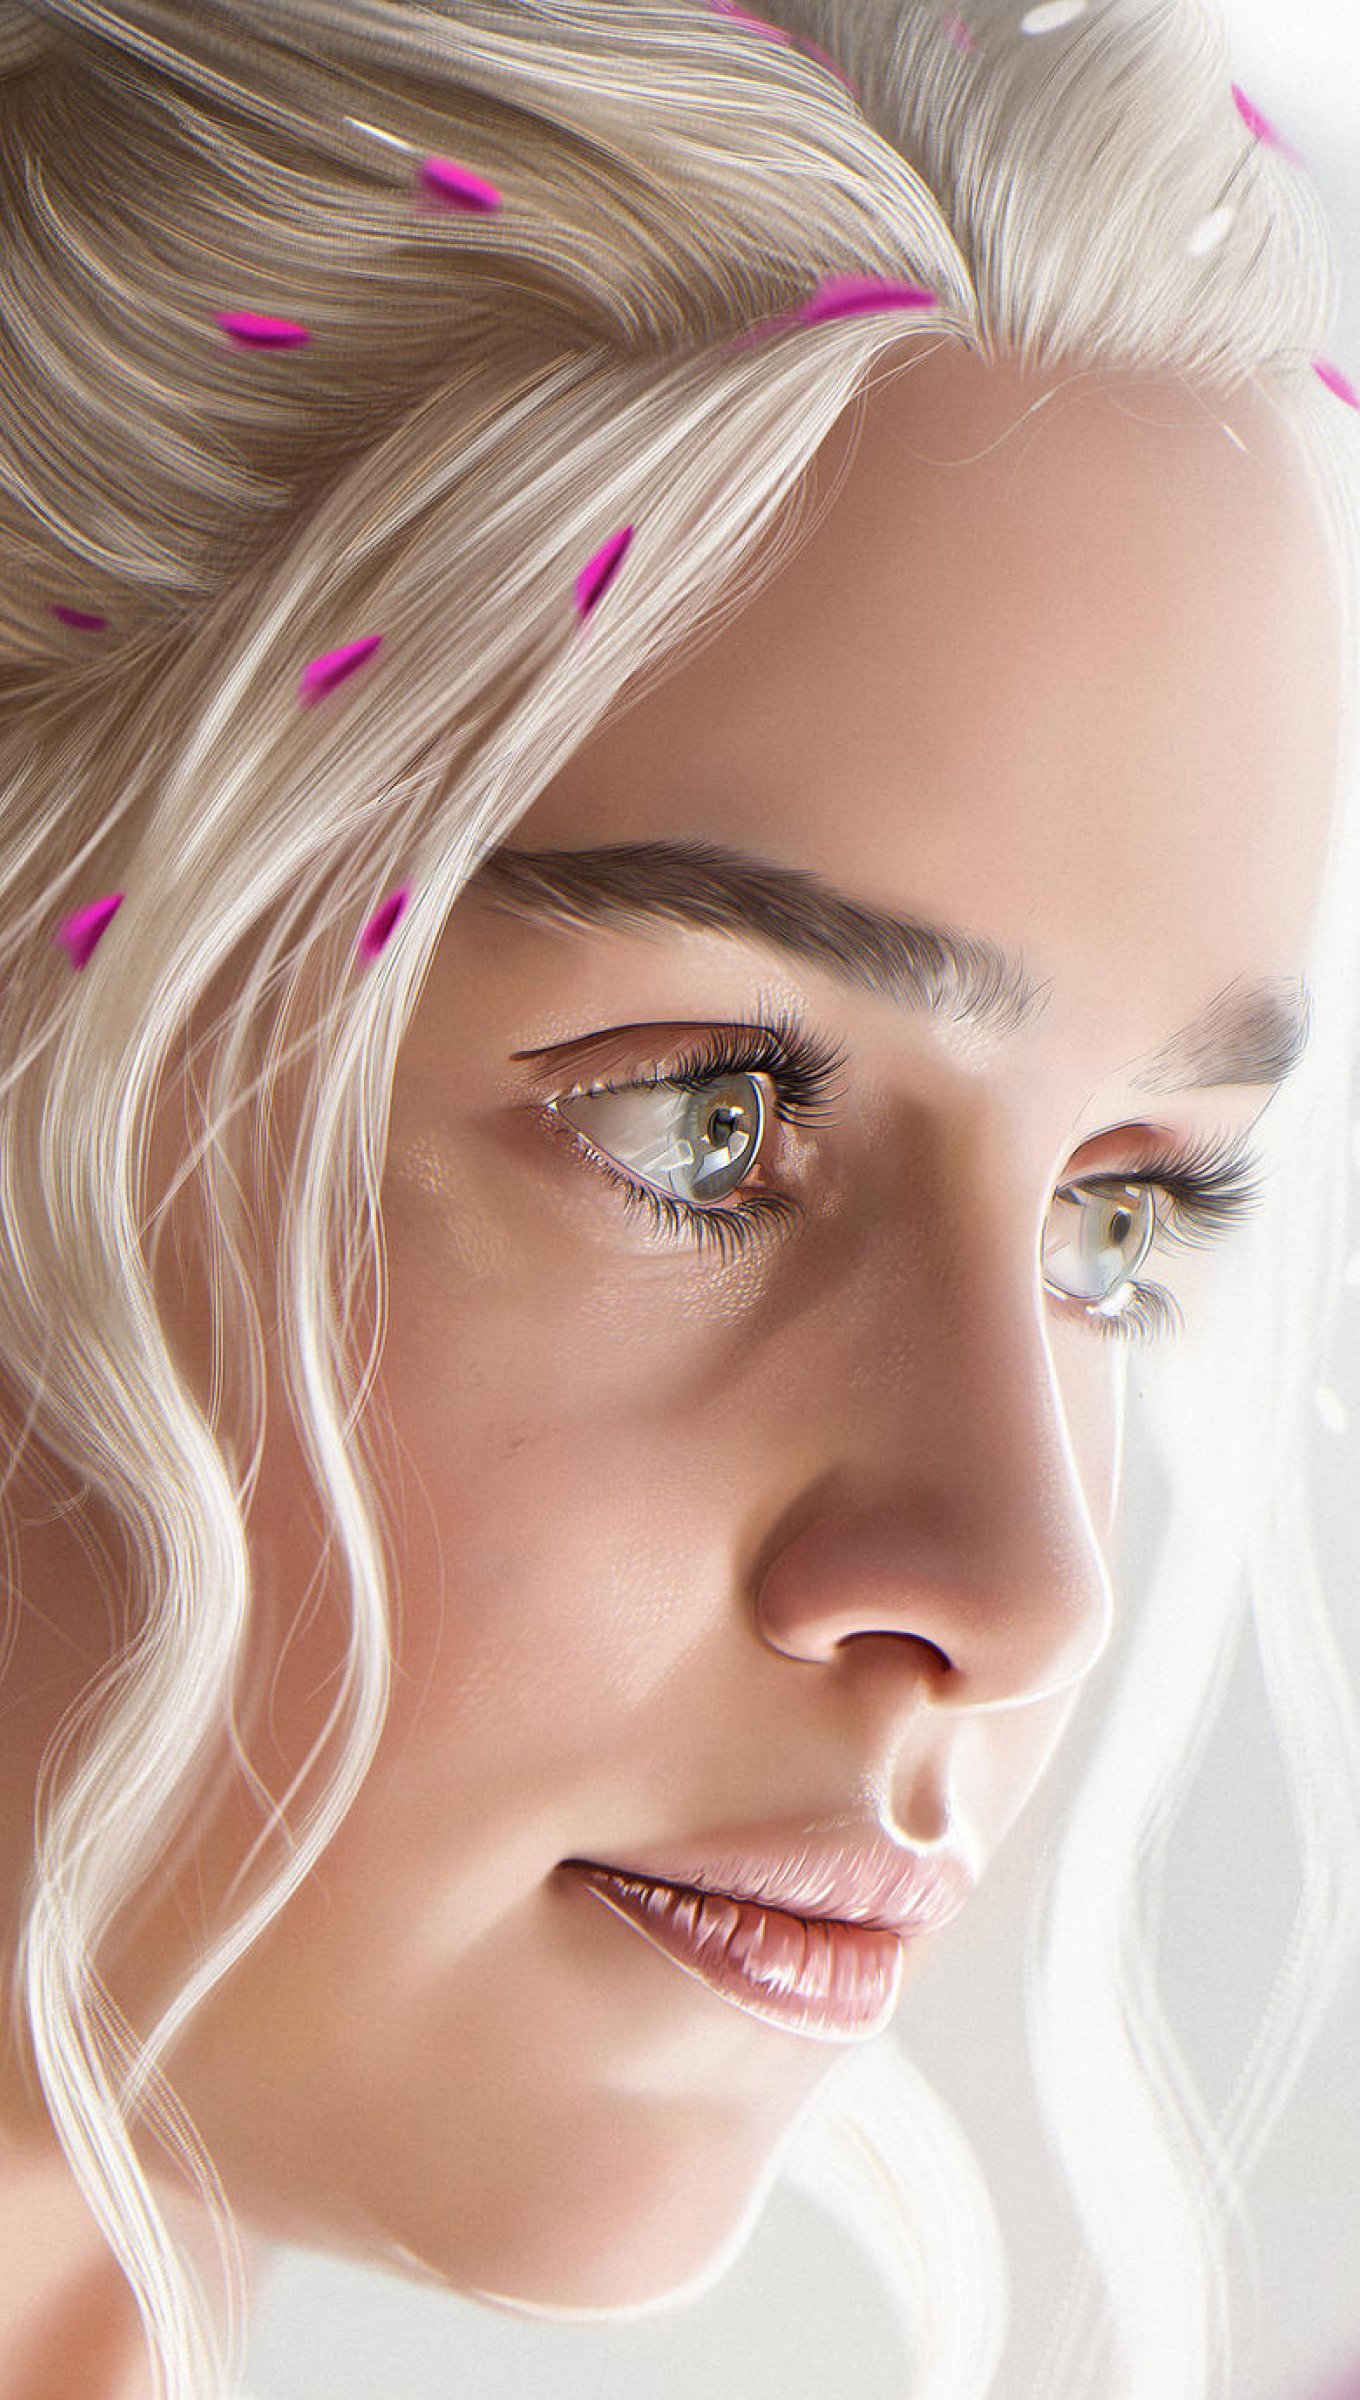 Wallpaper Daenerys Targaryen Digital Art Vertical